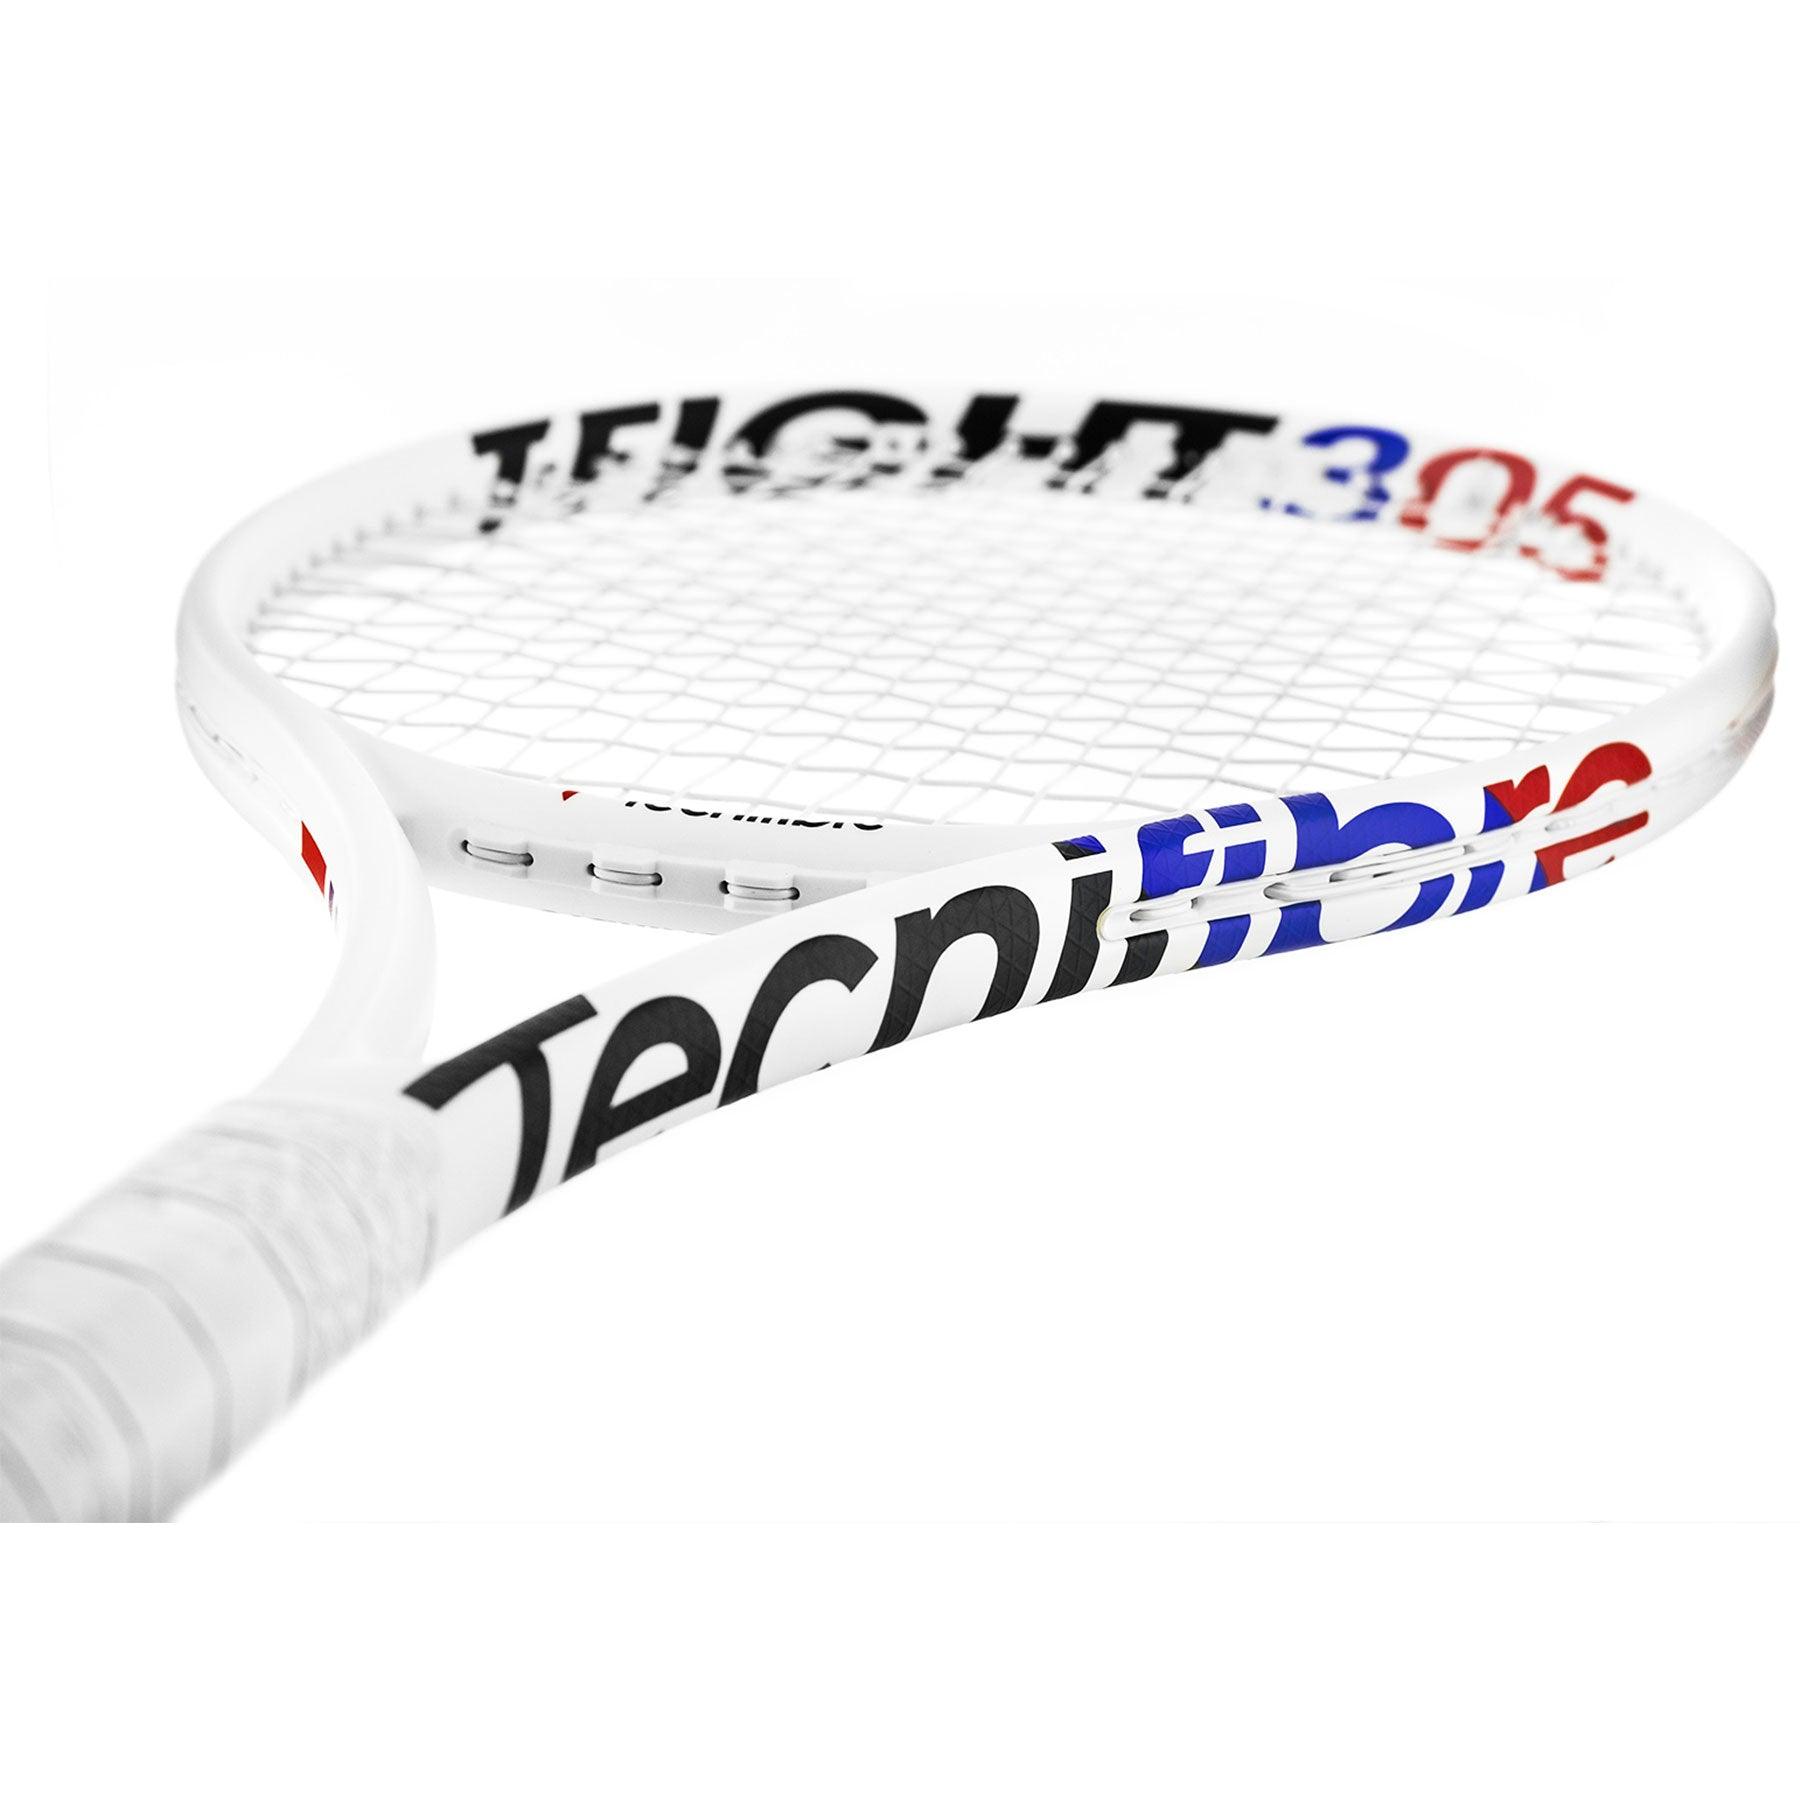 Tecnifibre T-Fight 305 ISO - Bassline Retail